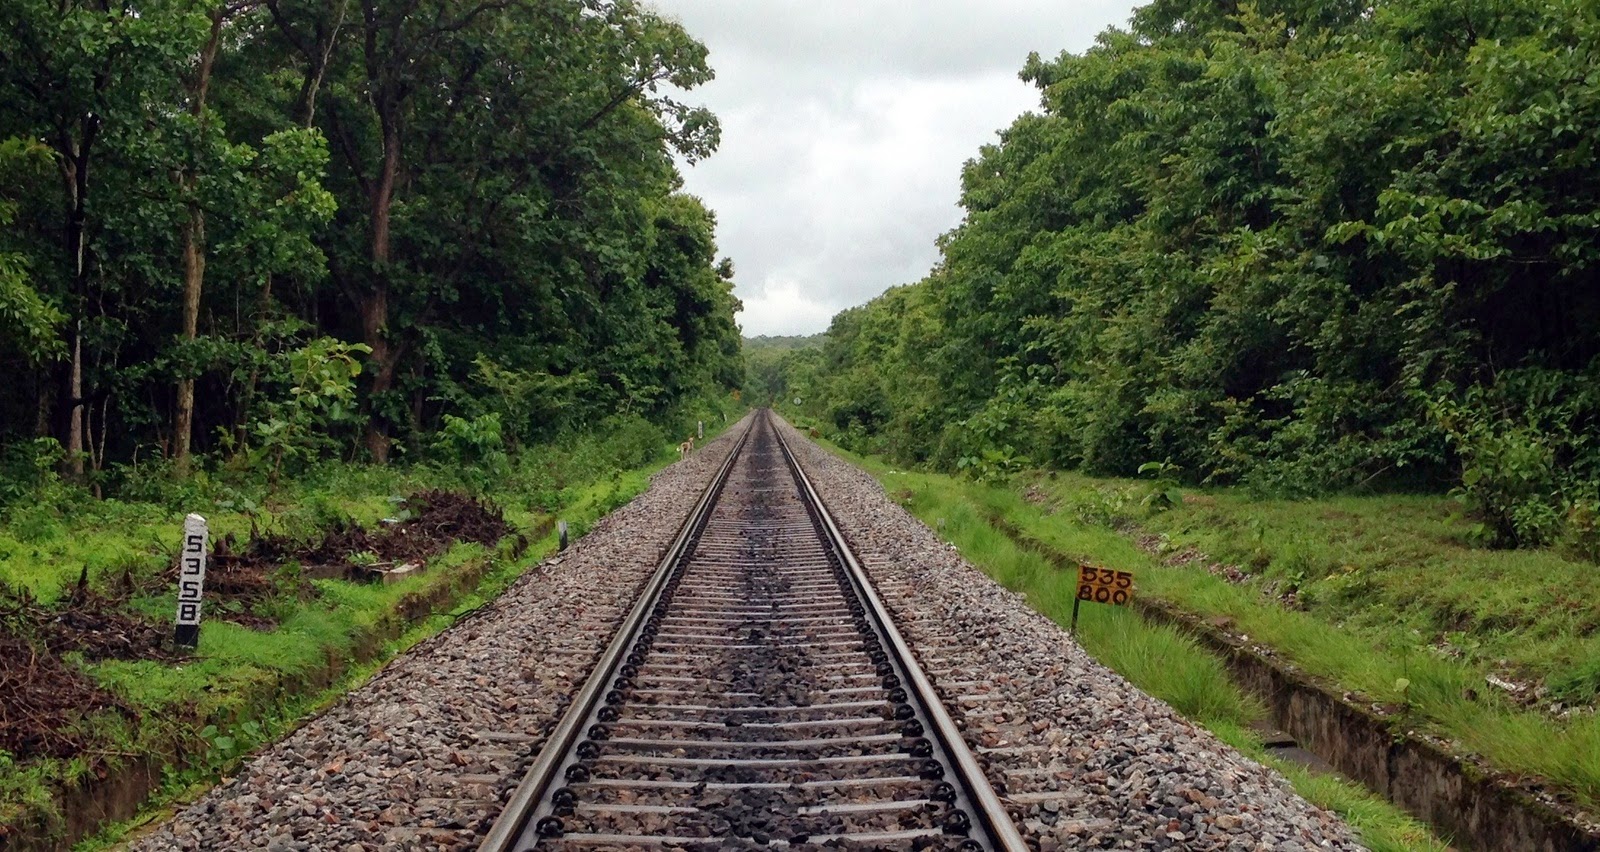 The railway track to Goa, the one we had trekked last year to Dudhsagar